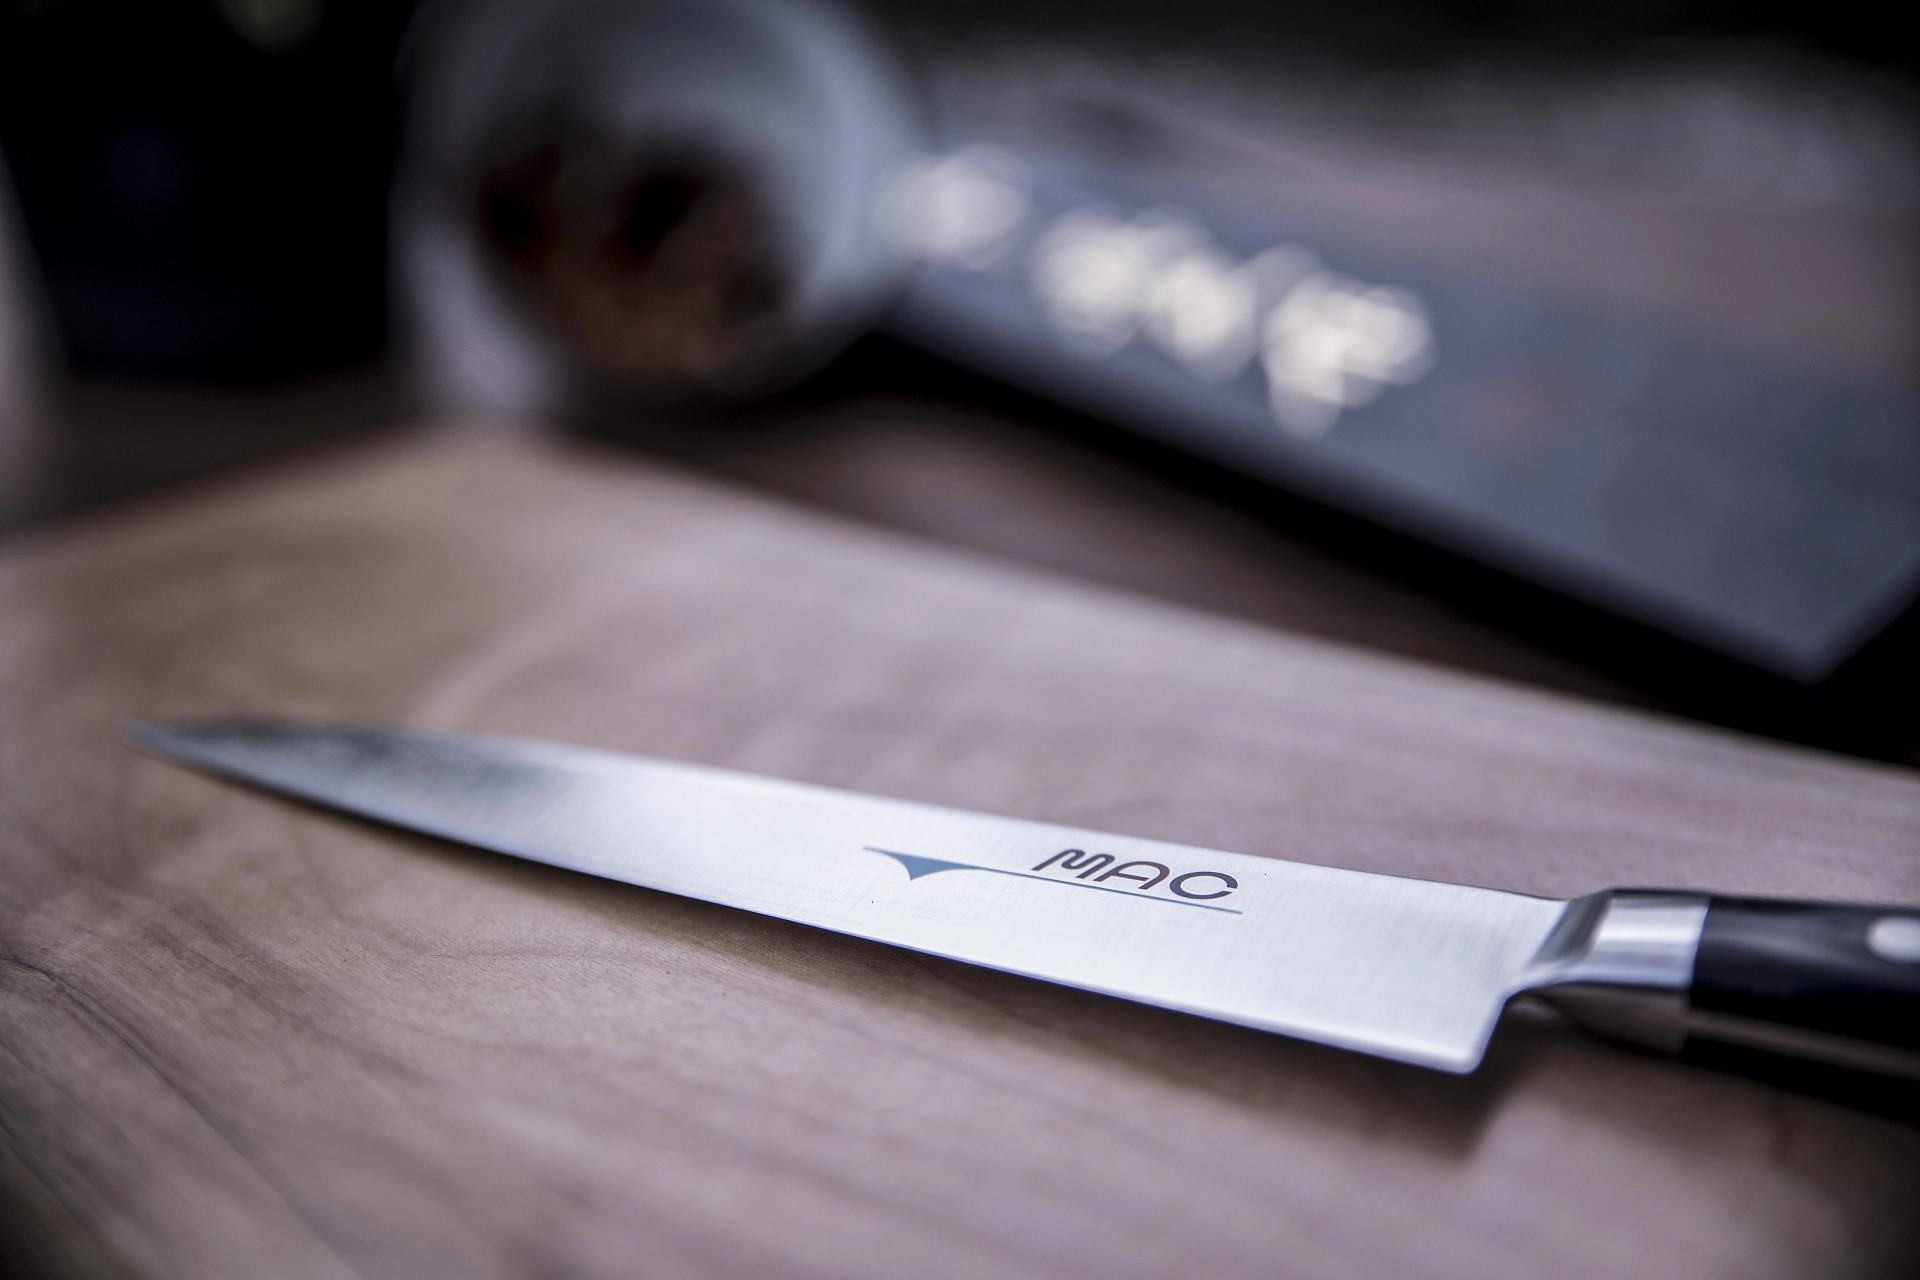 MAC Professional Utility Knife 155mm